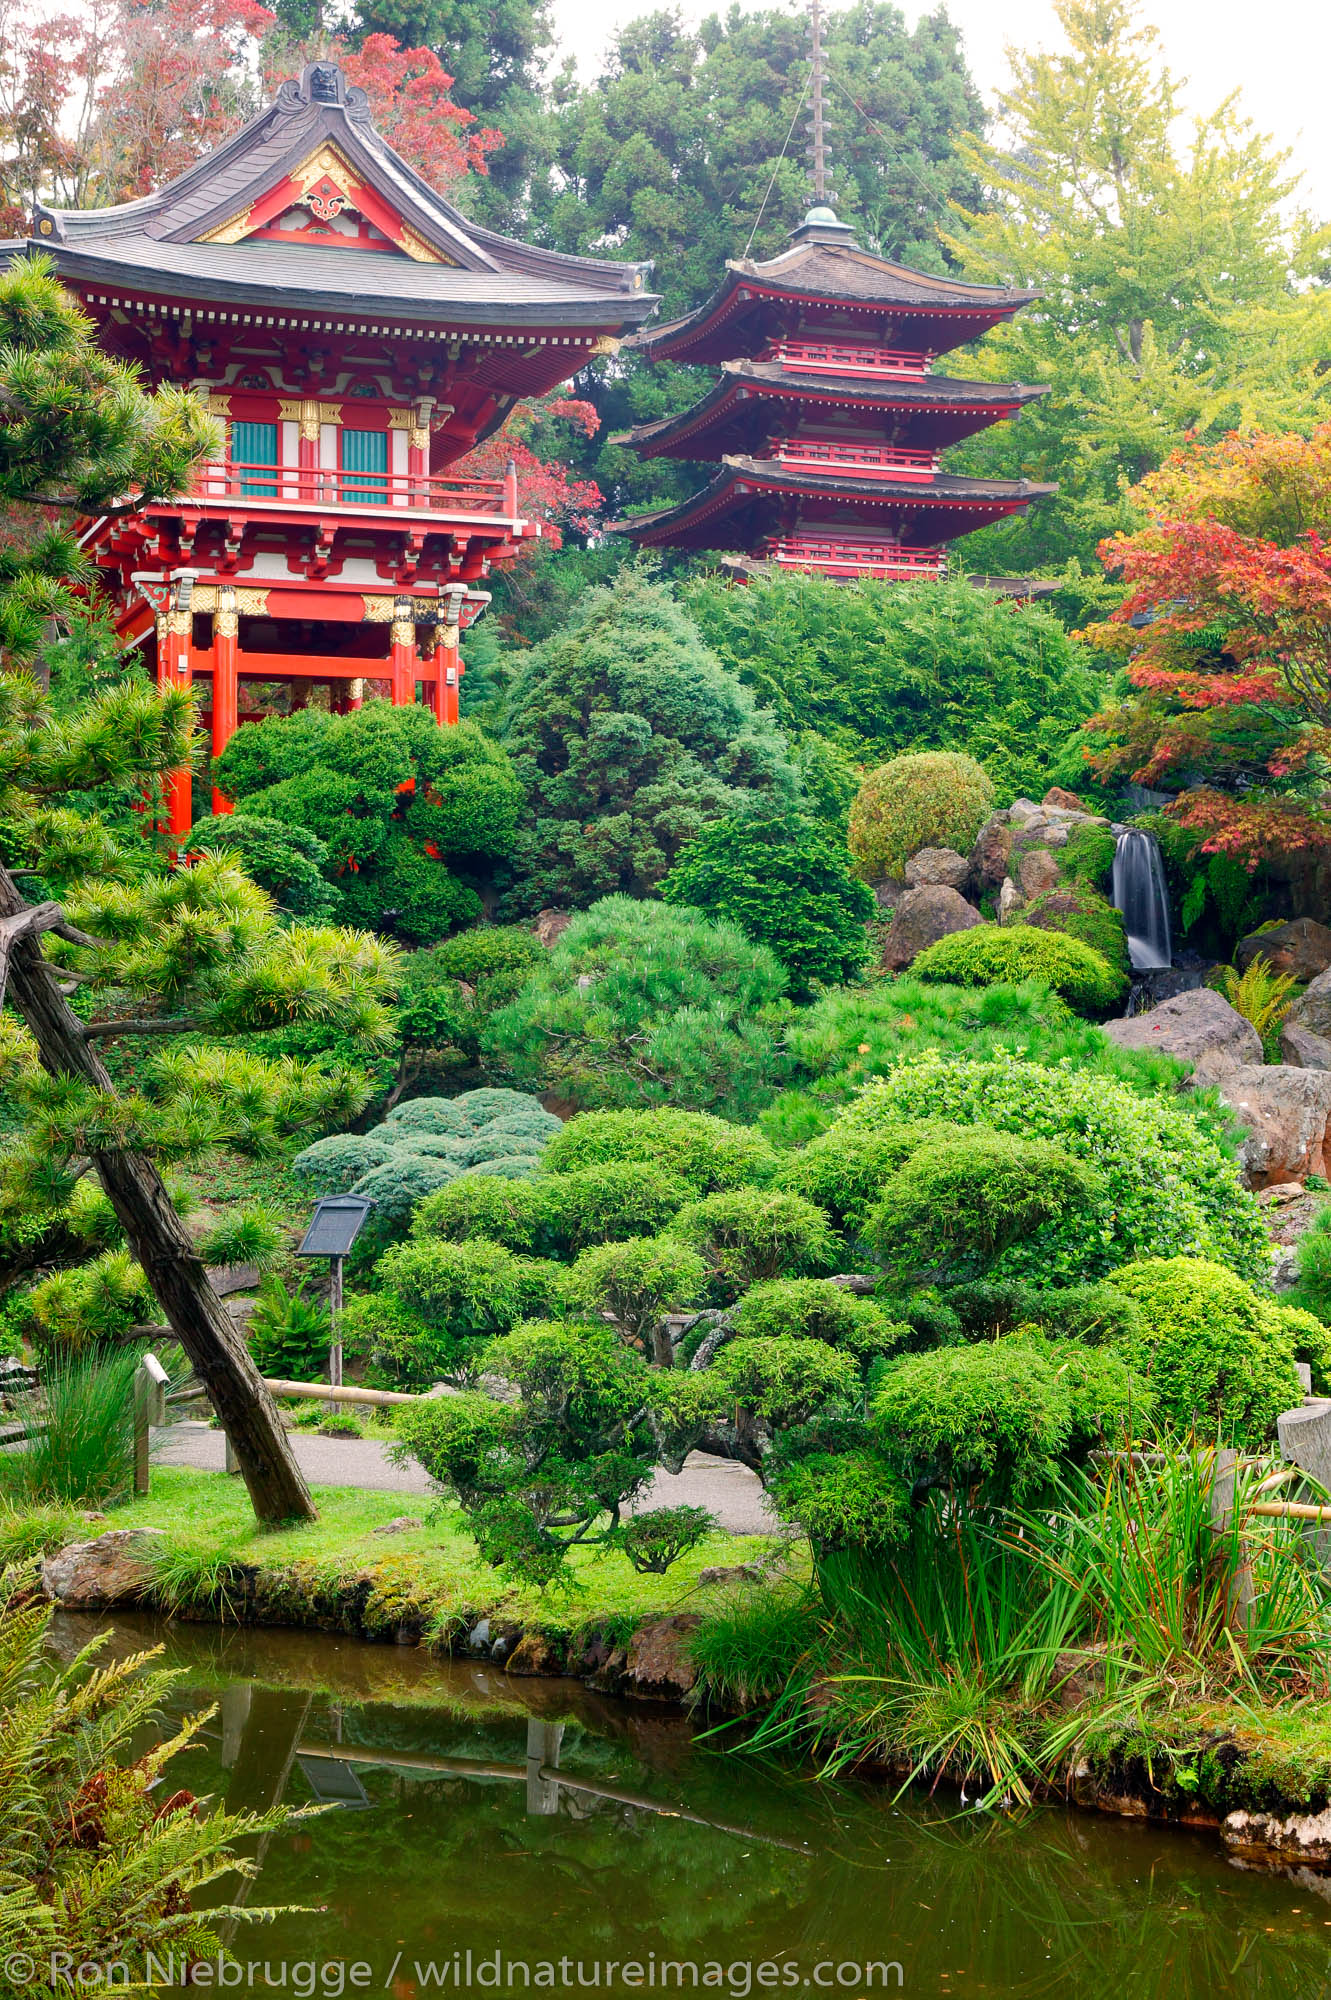 The Temple Gate and Buddhist Pagoda in the Japanese Tea Garden, Golden Gate Park, San Francisco, California.